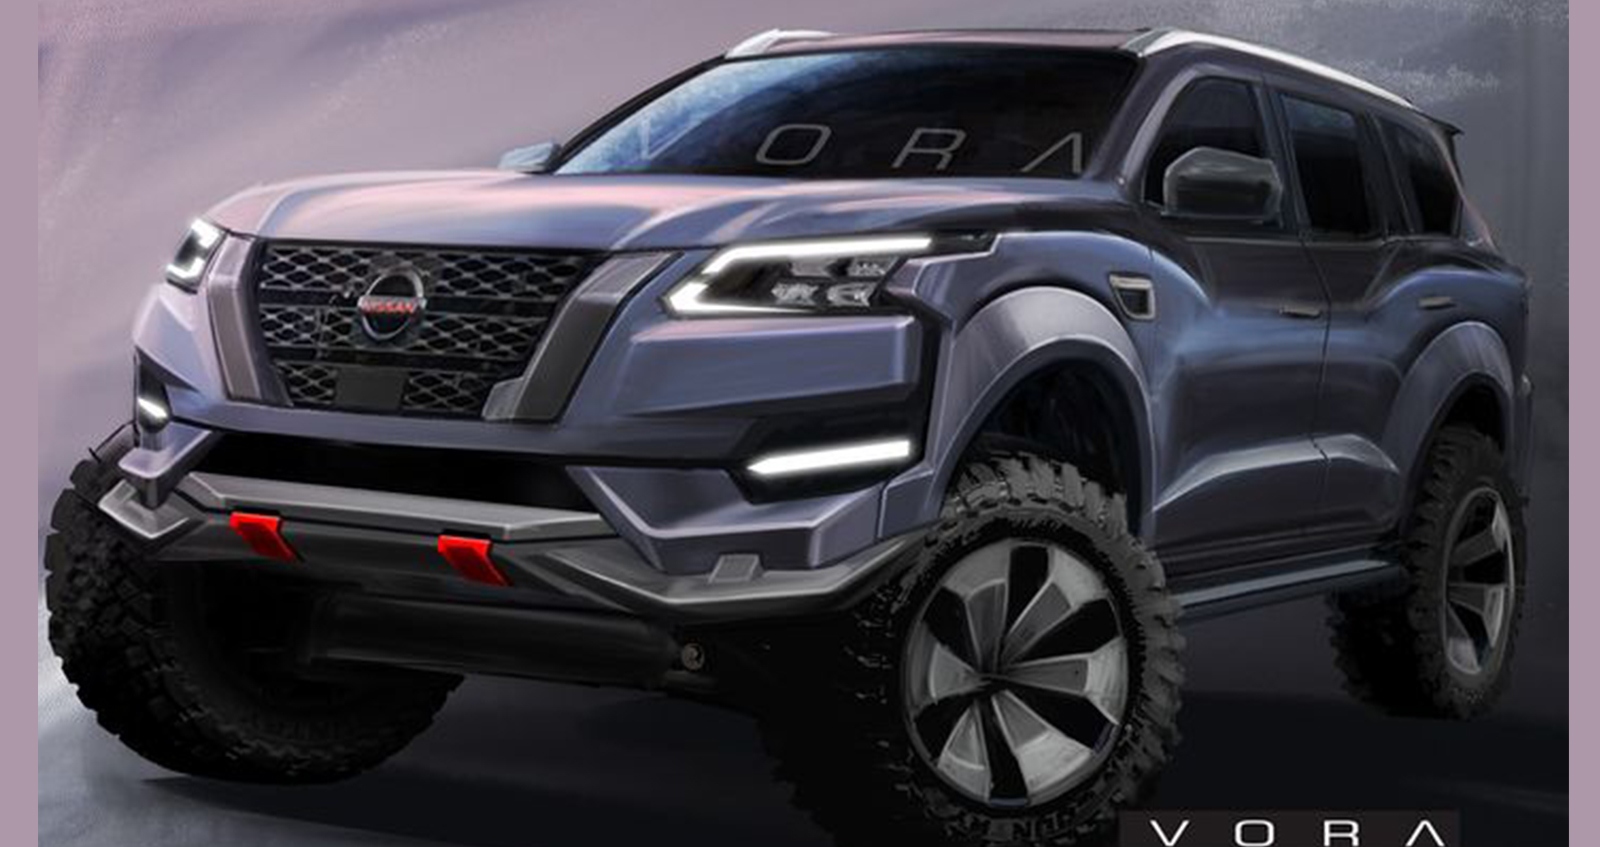 Nissan Terra Pro4X concept แต่งออฟโรต ภาพโดย VORA